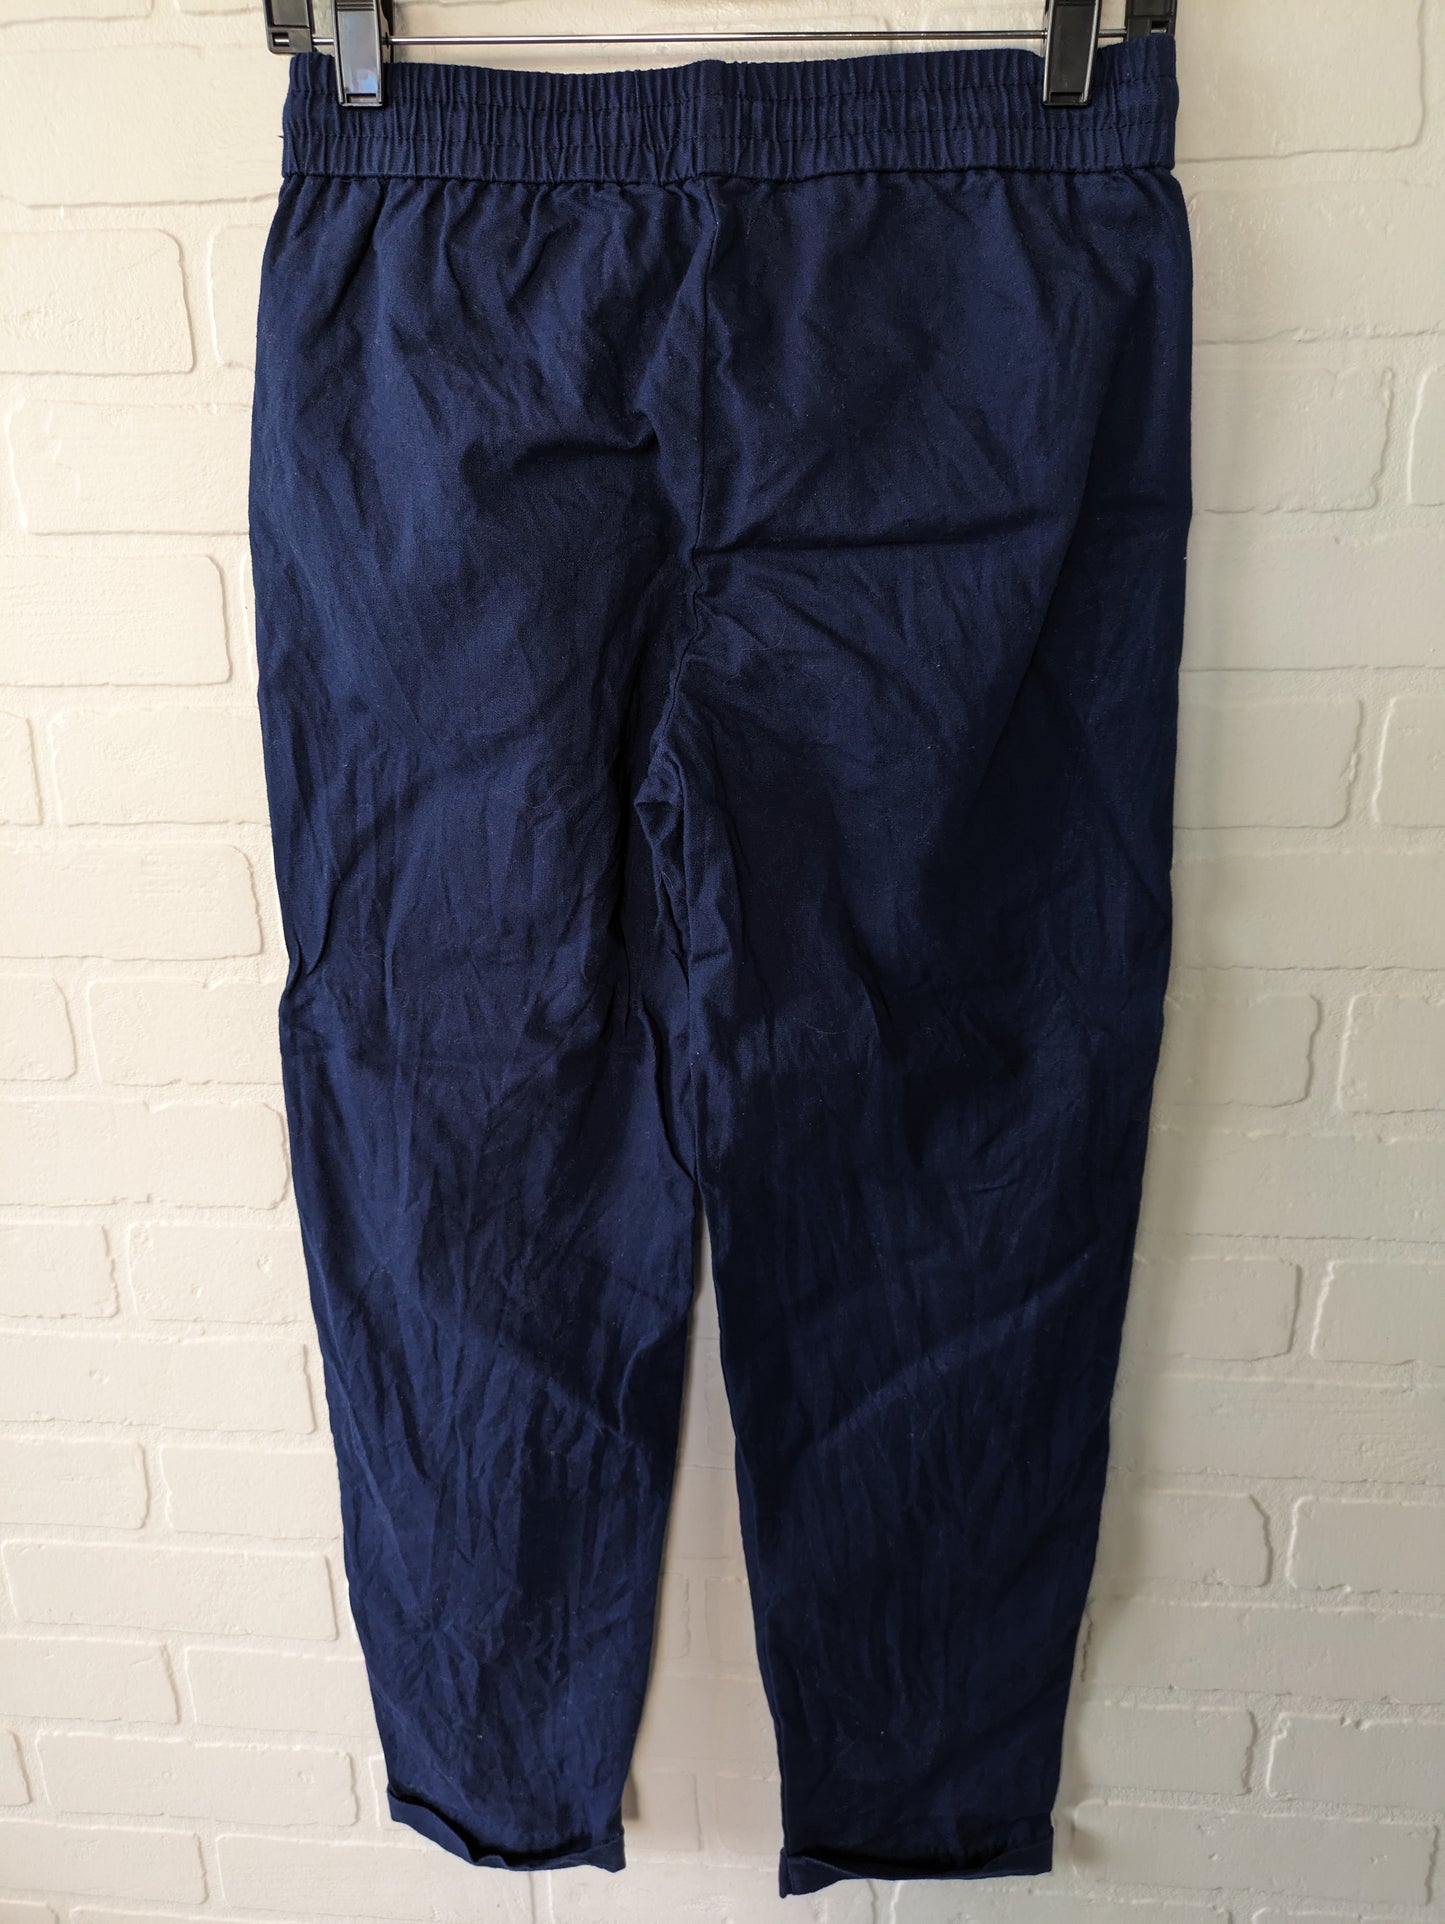 Pants Linen By J. Crew  Size: 00